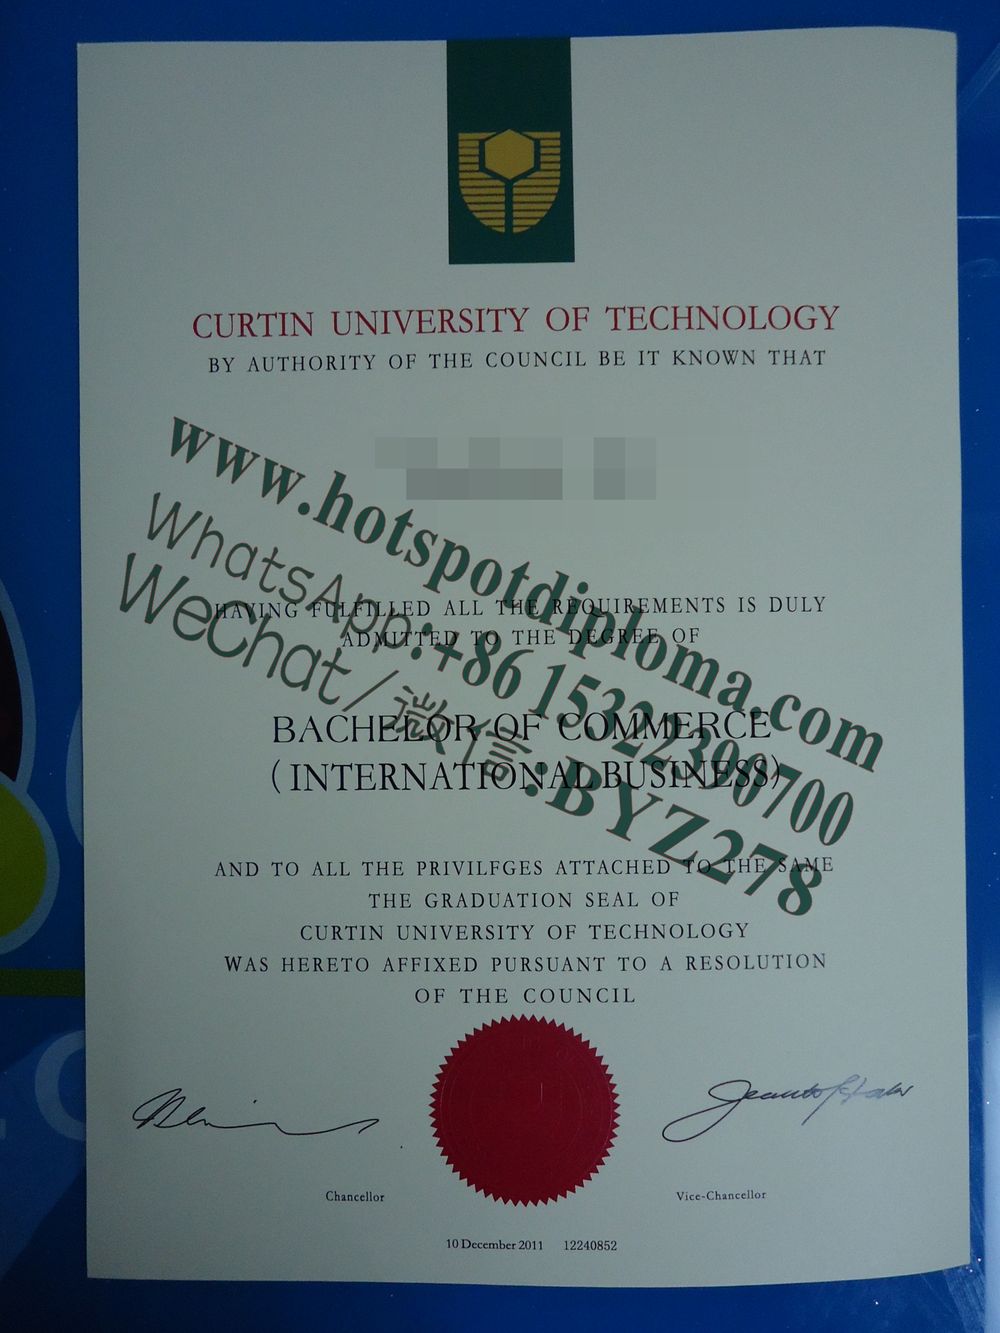 Fake Diploma of Curtin University of Technology